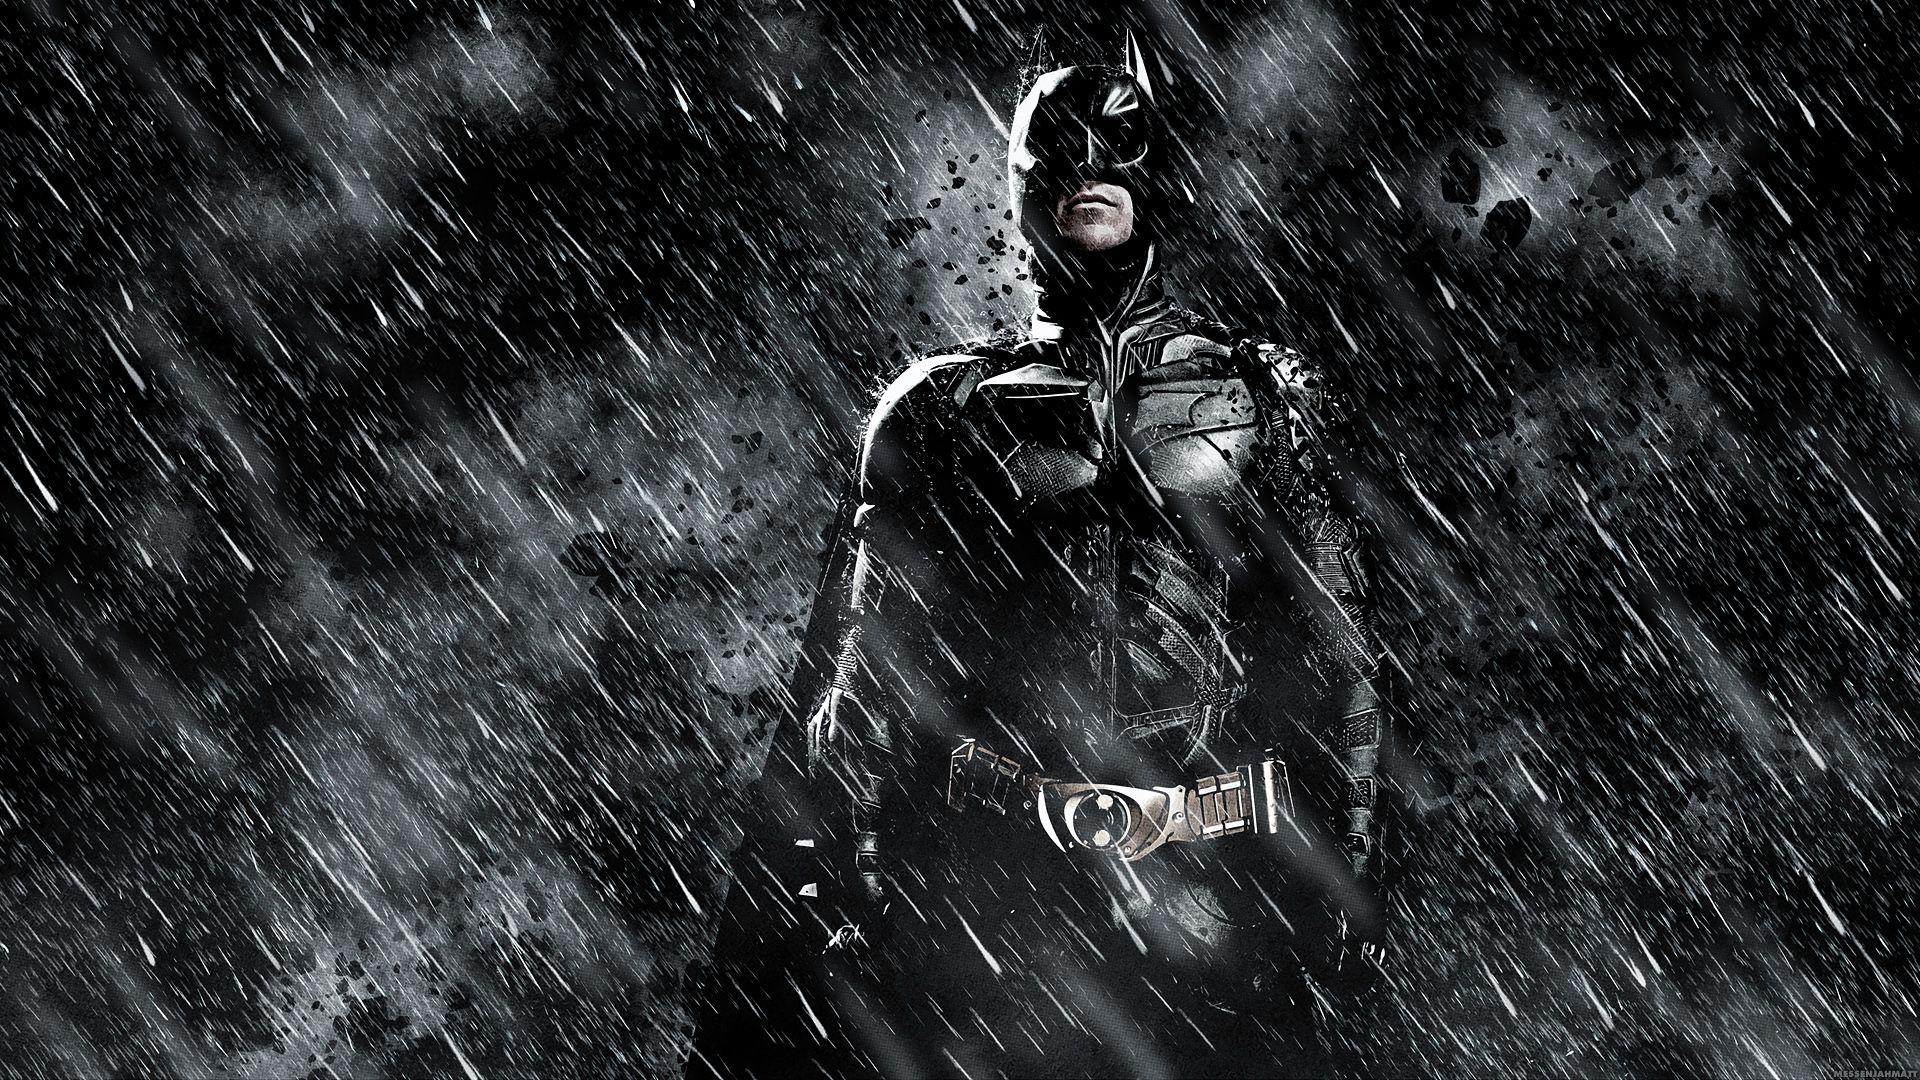 Dark Knight HD Wallpapers - Top Free Dark Knight HD Backgrounds